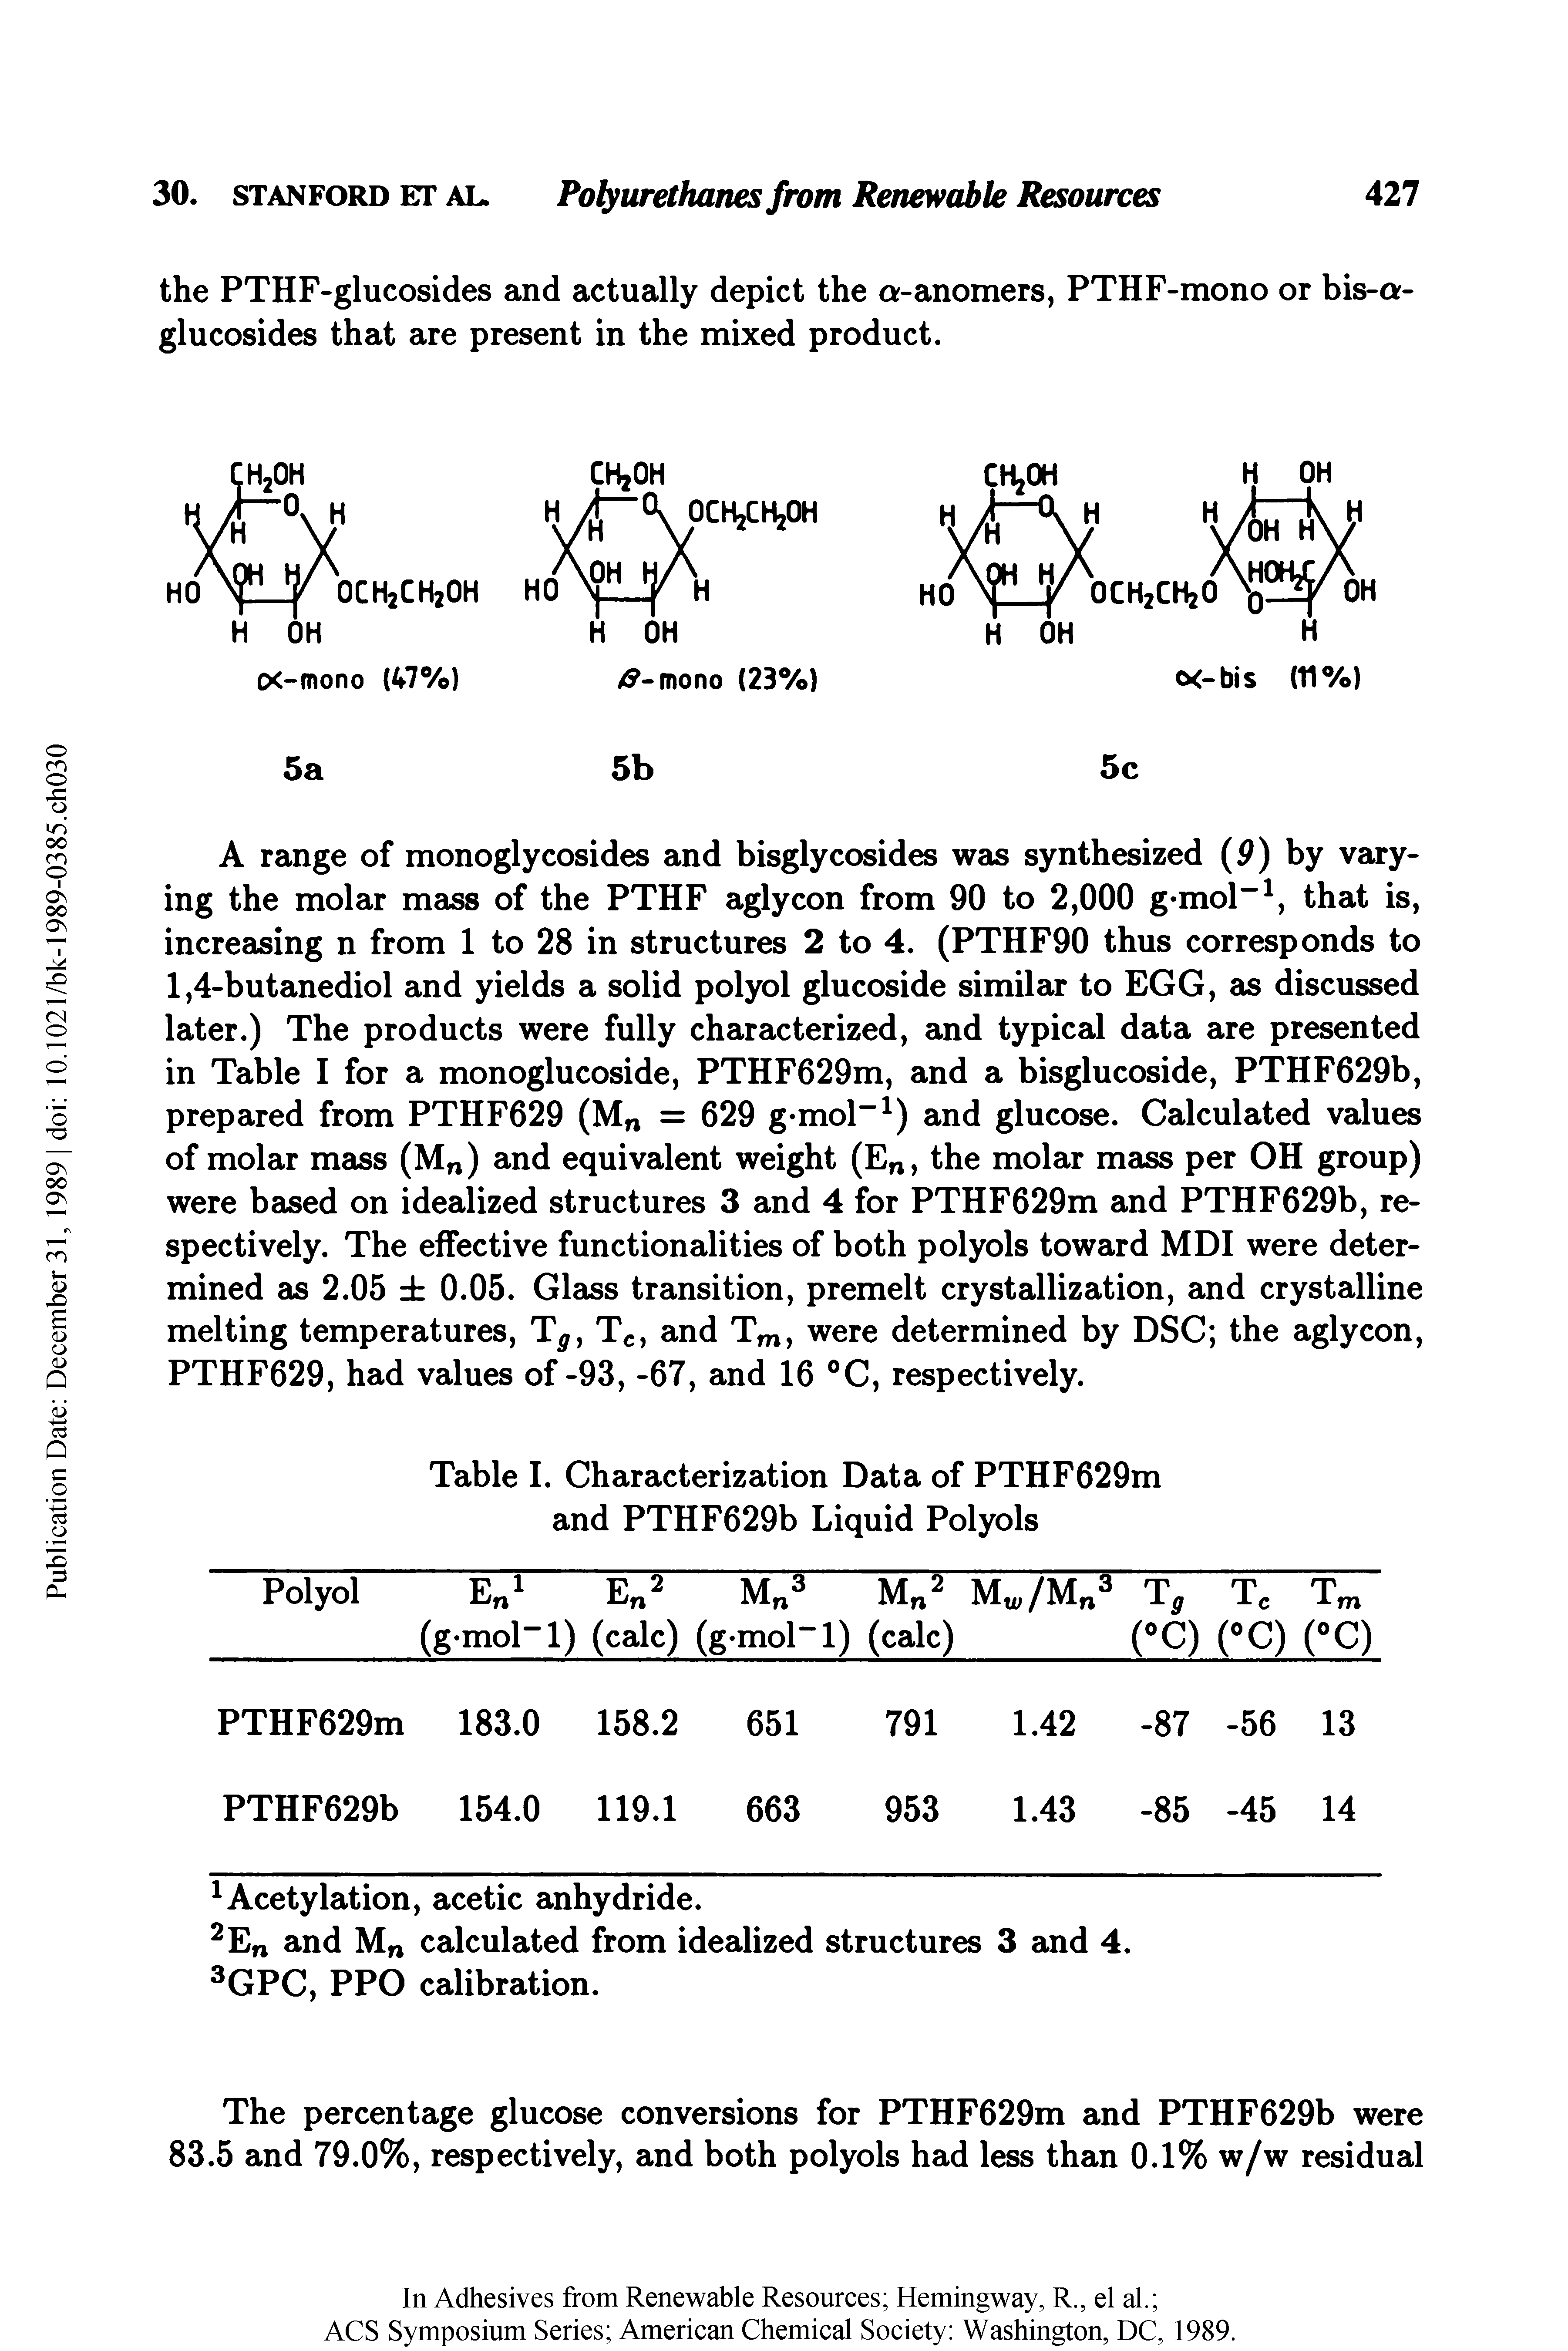 Table I. Characterization Data of PTHF629m and PTHF629b Liquid Polyols...